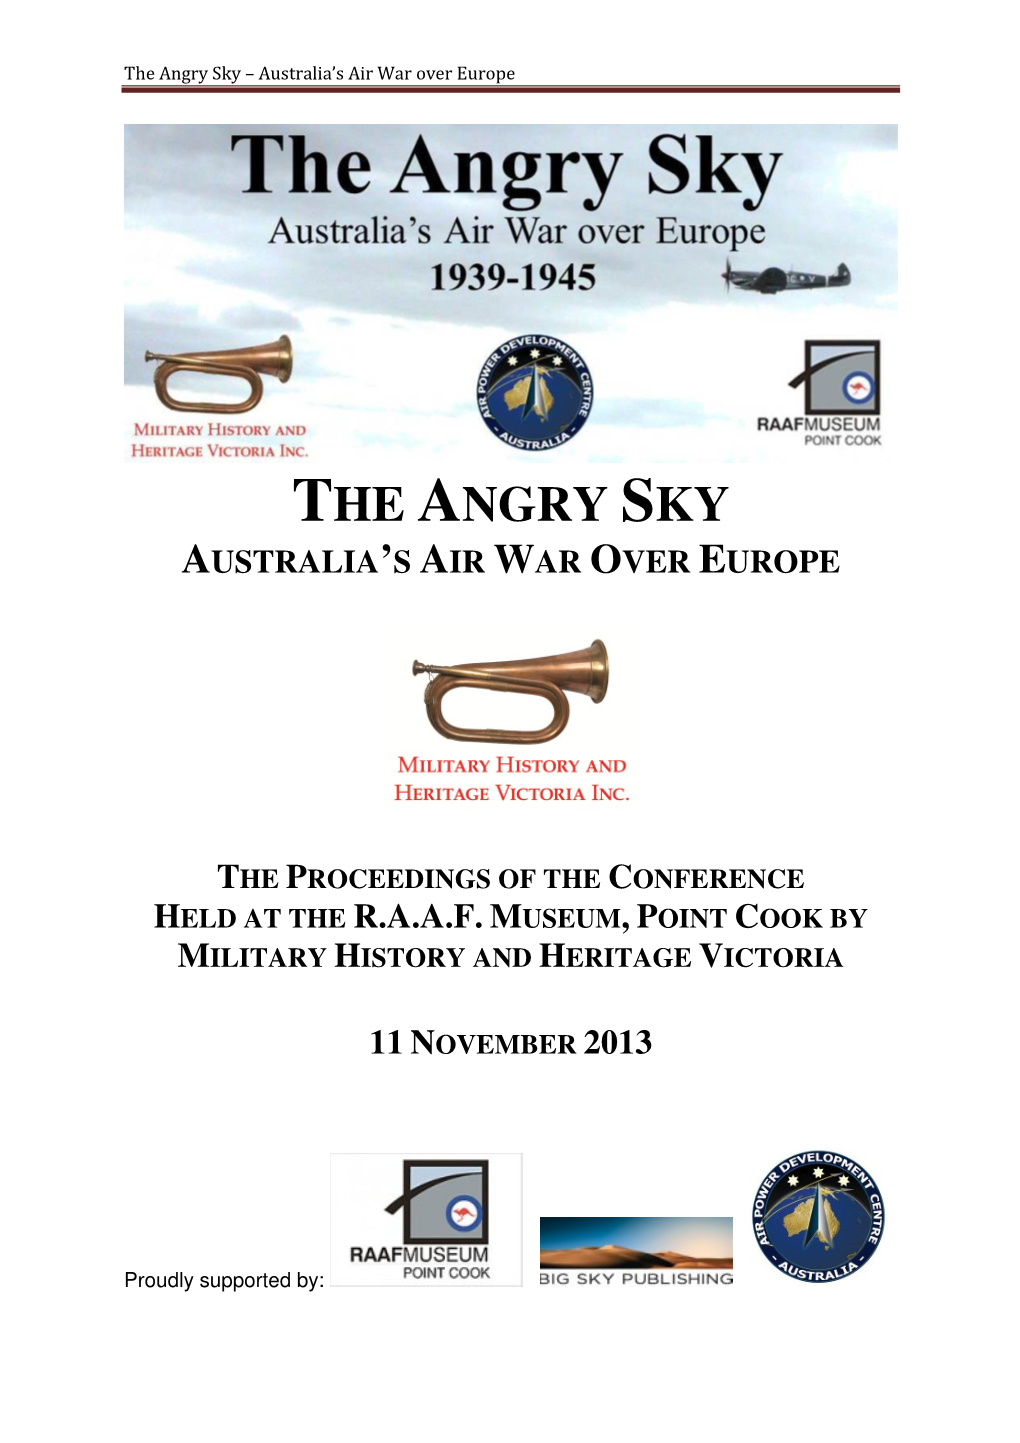 The Emerging Commemoration of Bomber Command in Australia Mr Xavier Fowler